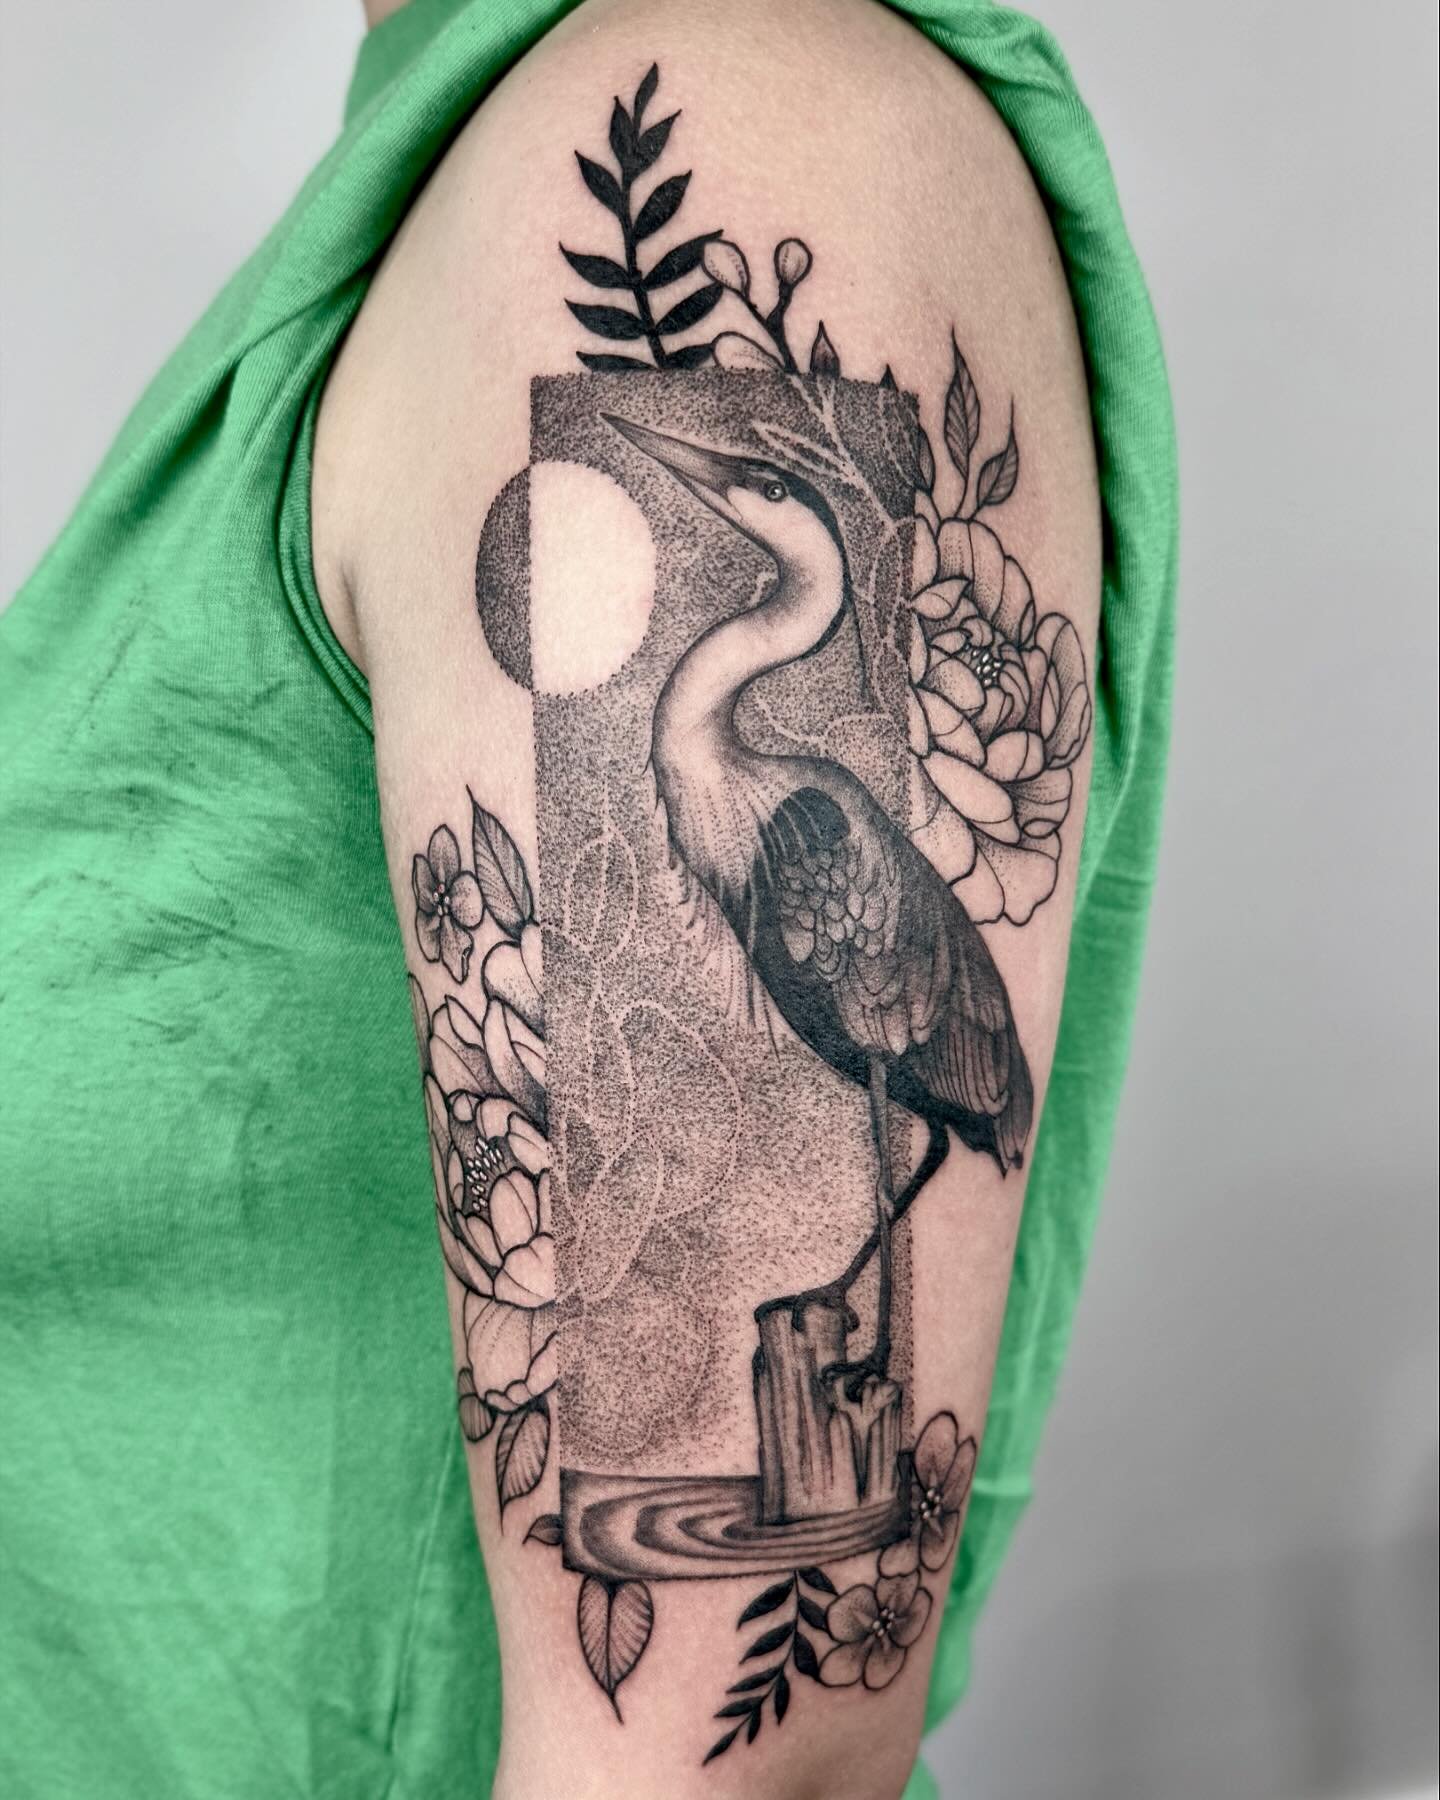 Great blue heron for Dee, thanks again!
#greatblueheron #herontattoo #birdtattoo #blackink #savannahtattoo #tattoooftheday #tattooart